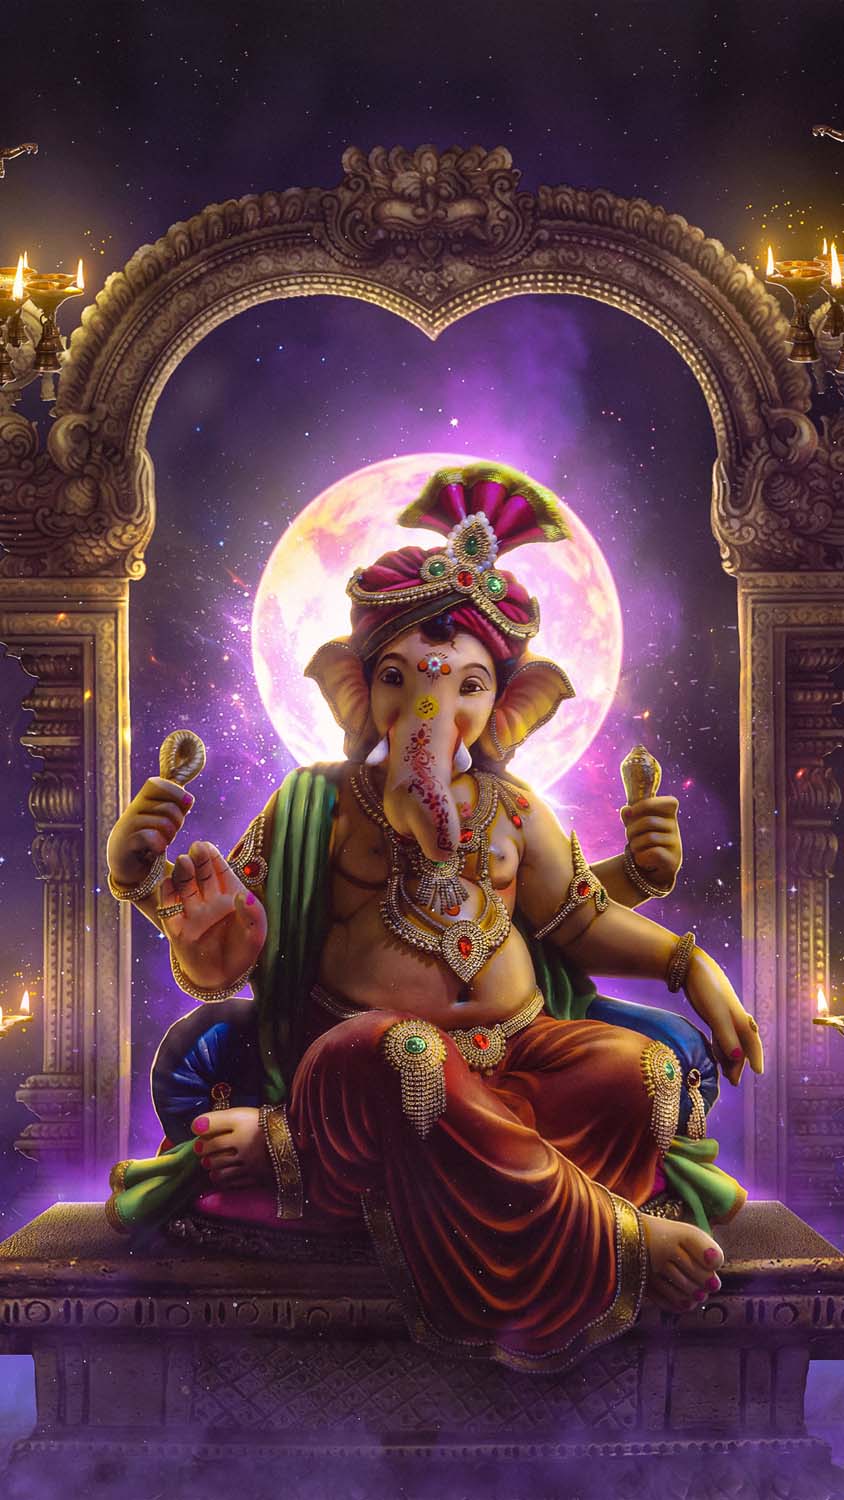 Ganesha God IPhone Wallpaper HD - IPhone Wallpapers : iPhone ...